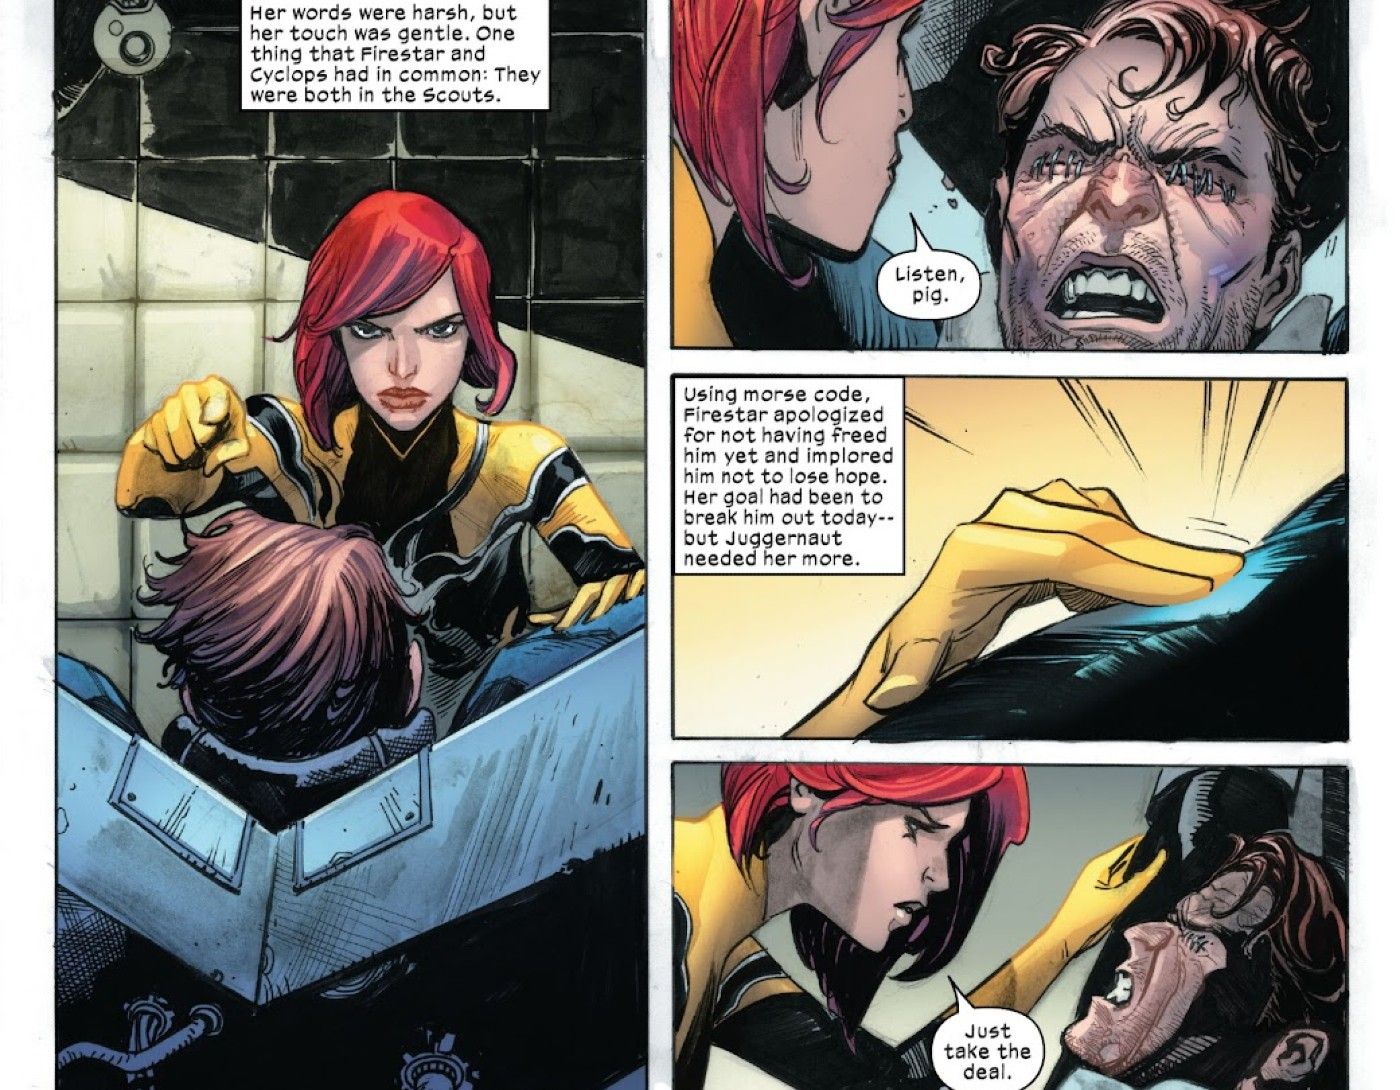 X-Men #28, Firestar uses morse code on X-Men's Cyclops